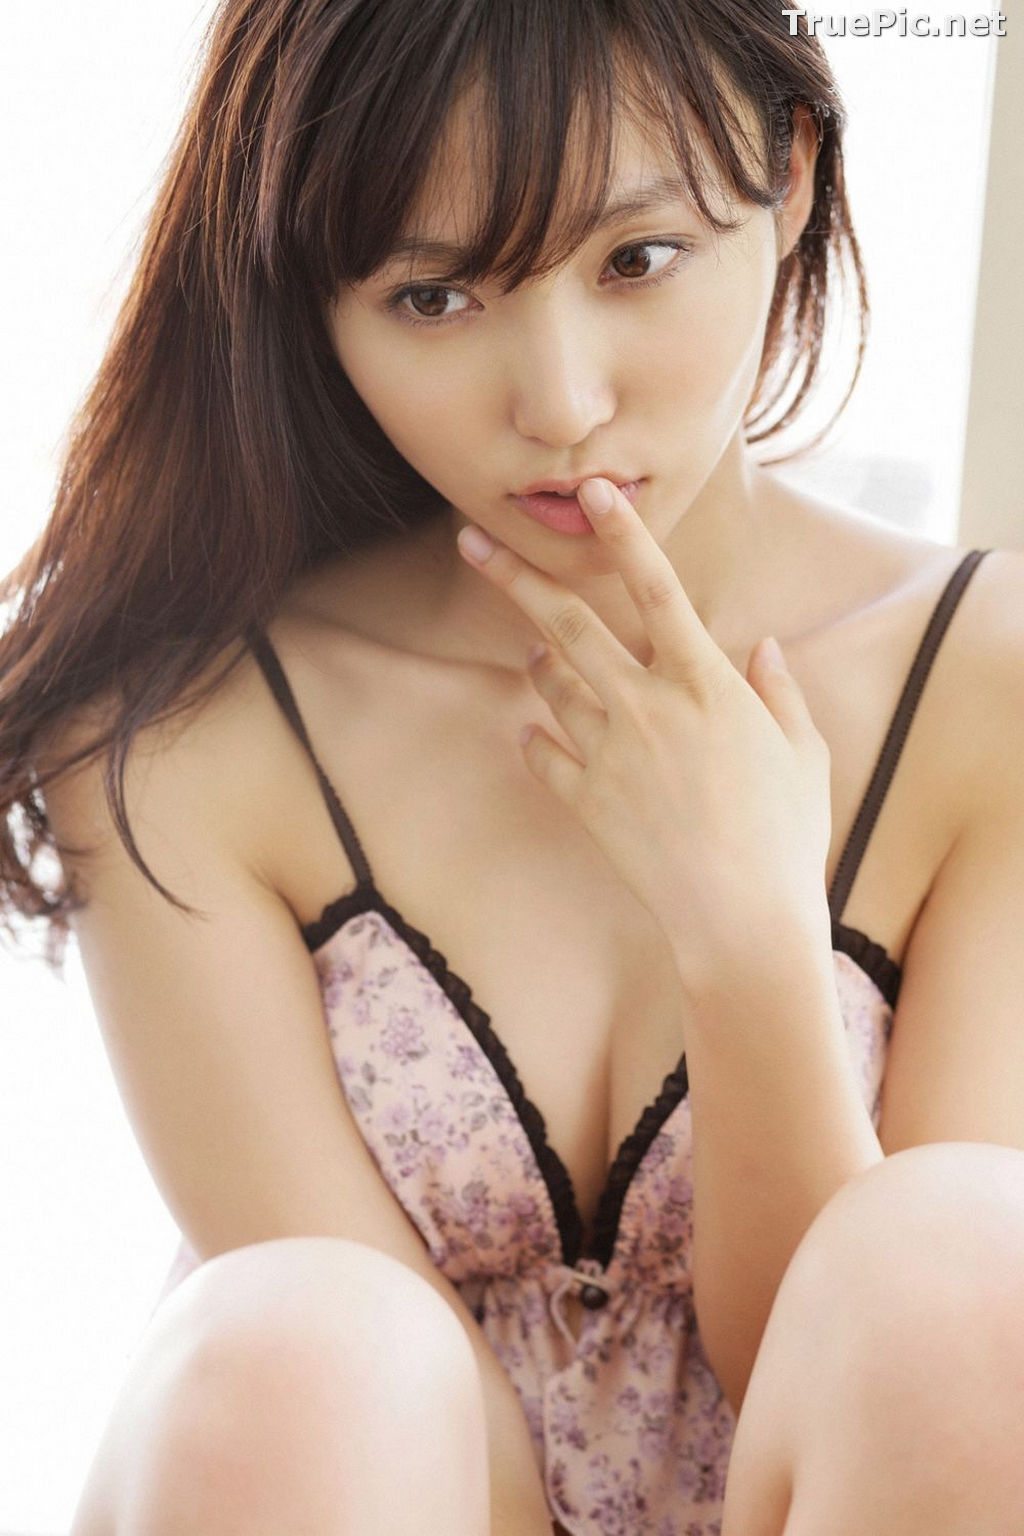 Image [YS Web] Vol.527 - Japanese Gravure Idol and Singer - Risa Yoshiki - TruePic.net - Picture-38